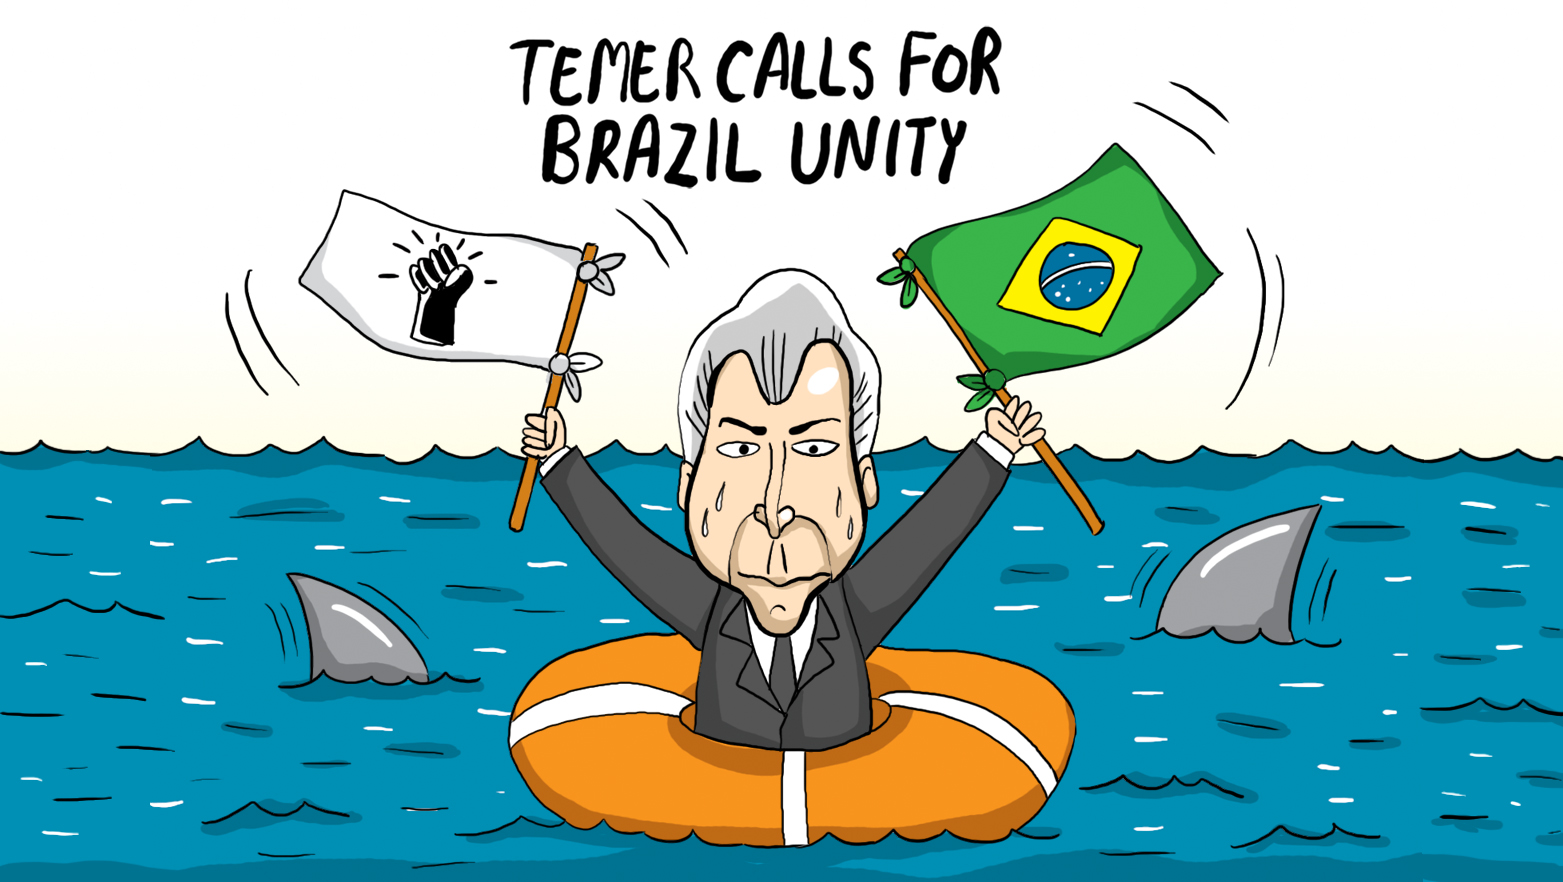 Temer calls for Brazil unity